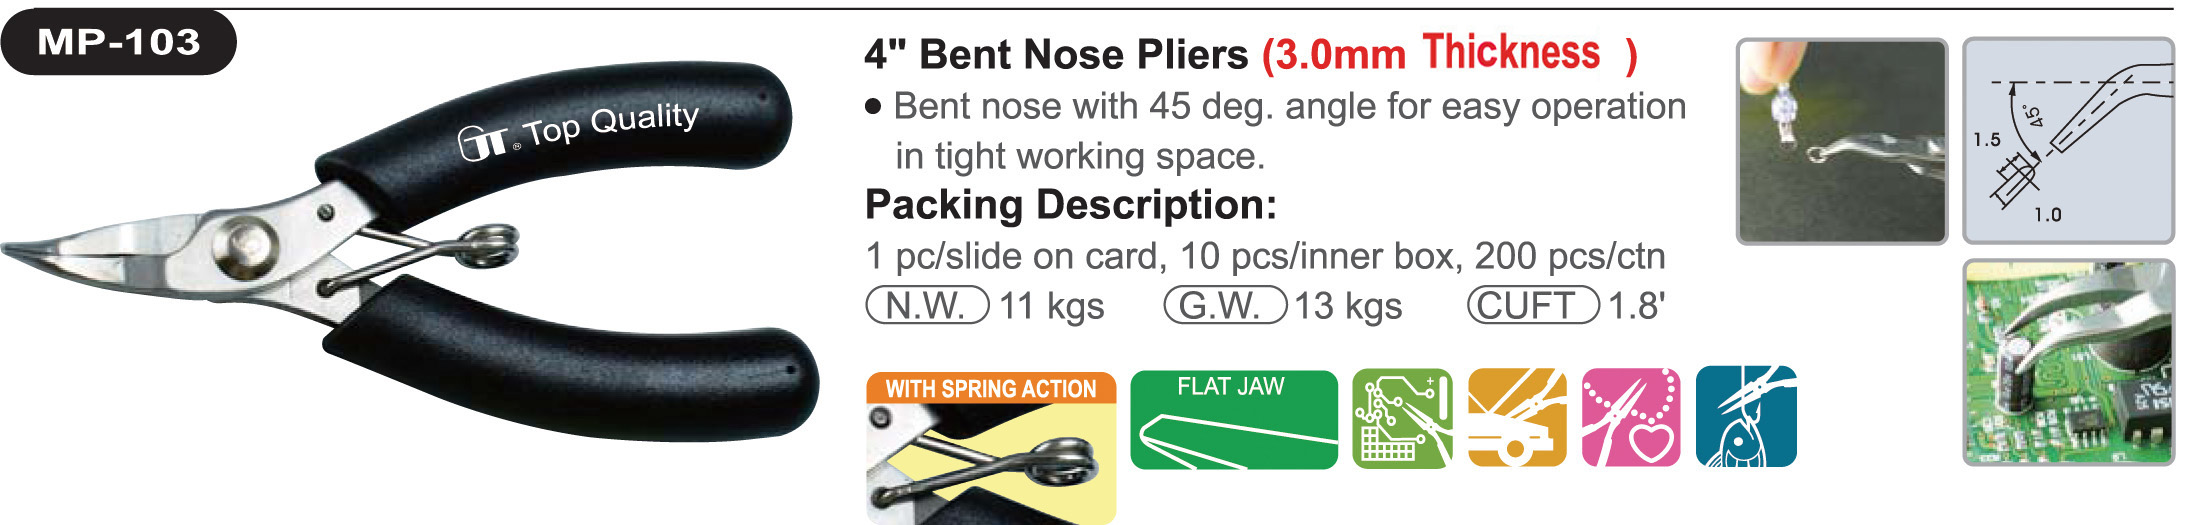 proimages/product/pliers/gripping_pliers/Bent_Nose_Pliers/MP-103/MP-103.jpg